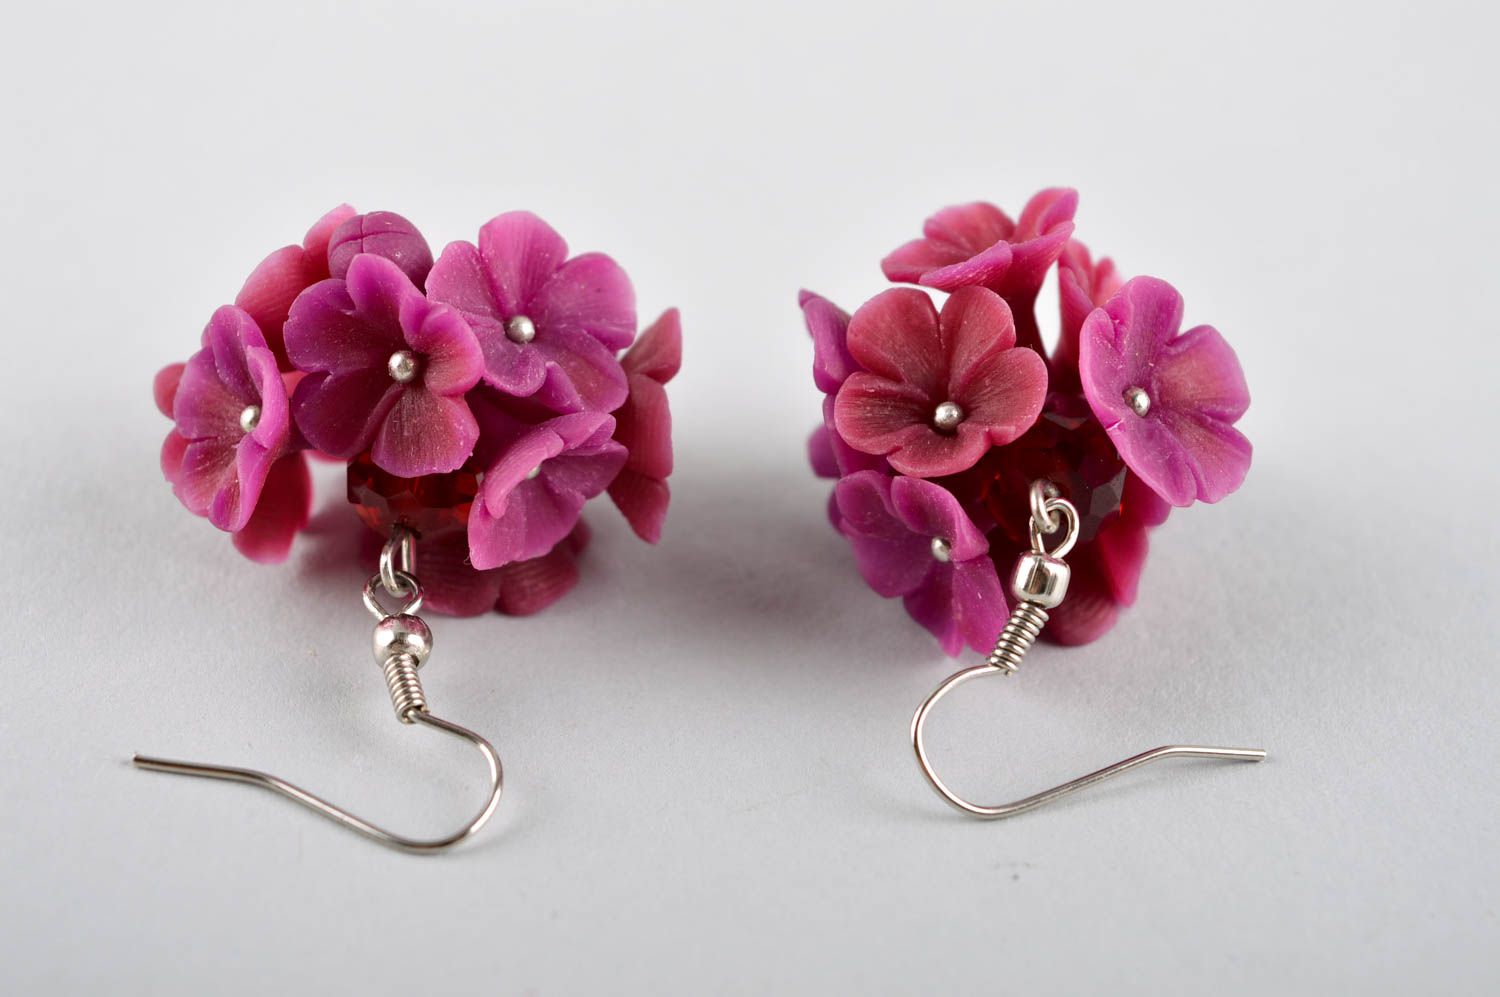 Flower earrings handmade plastic earrings polymer clay accessories for women photo 5